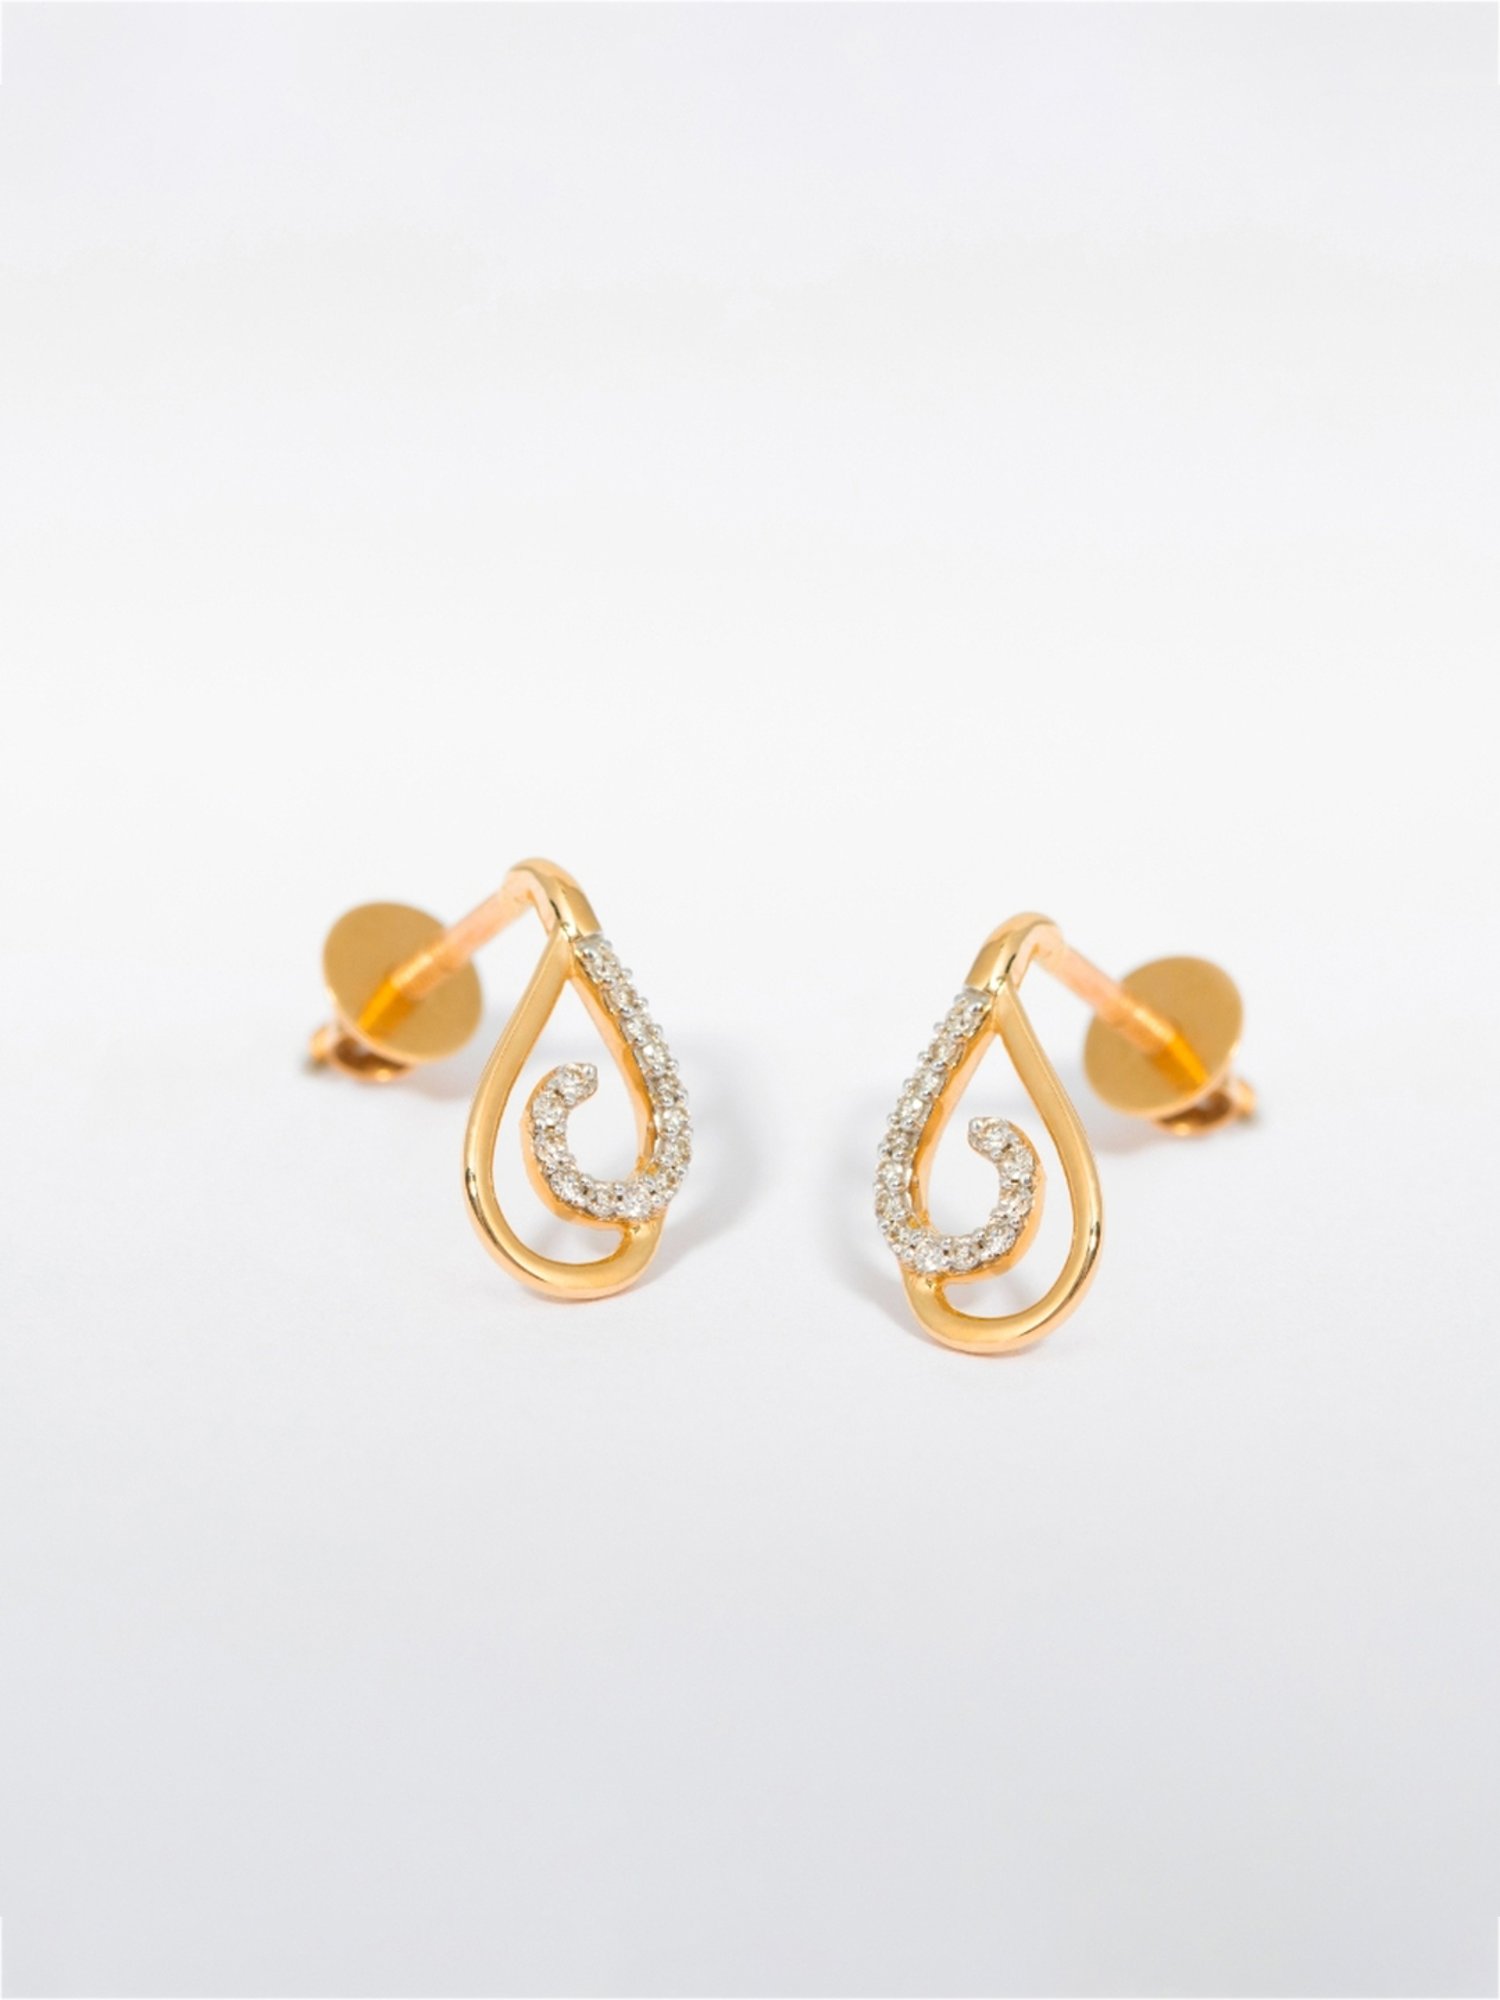 Buy P.N.GADGIL JEWELLERS Assorted Womens Artistic Heart Diamond Earrings -  DJLRSER0013 | Shoppers Stop